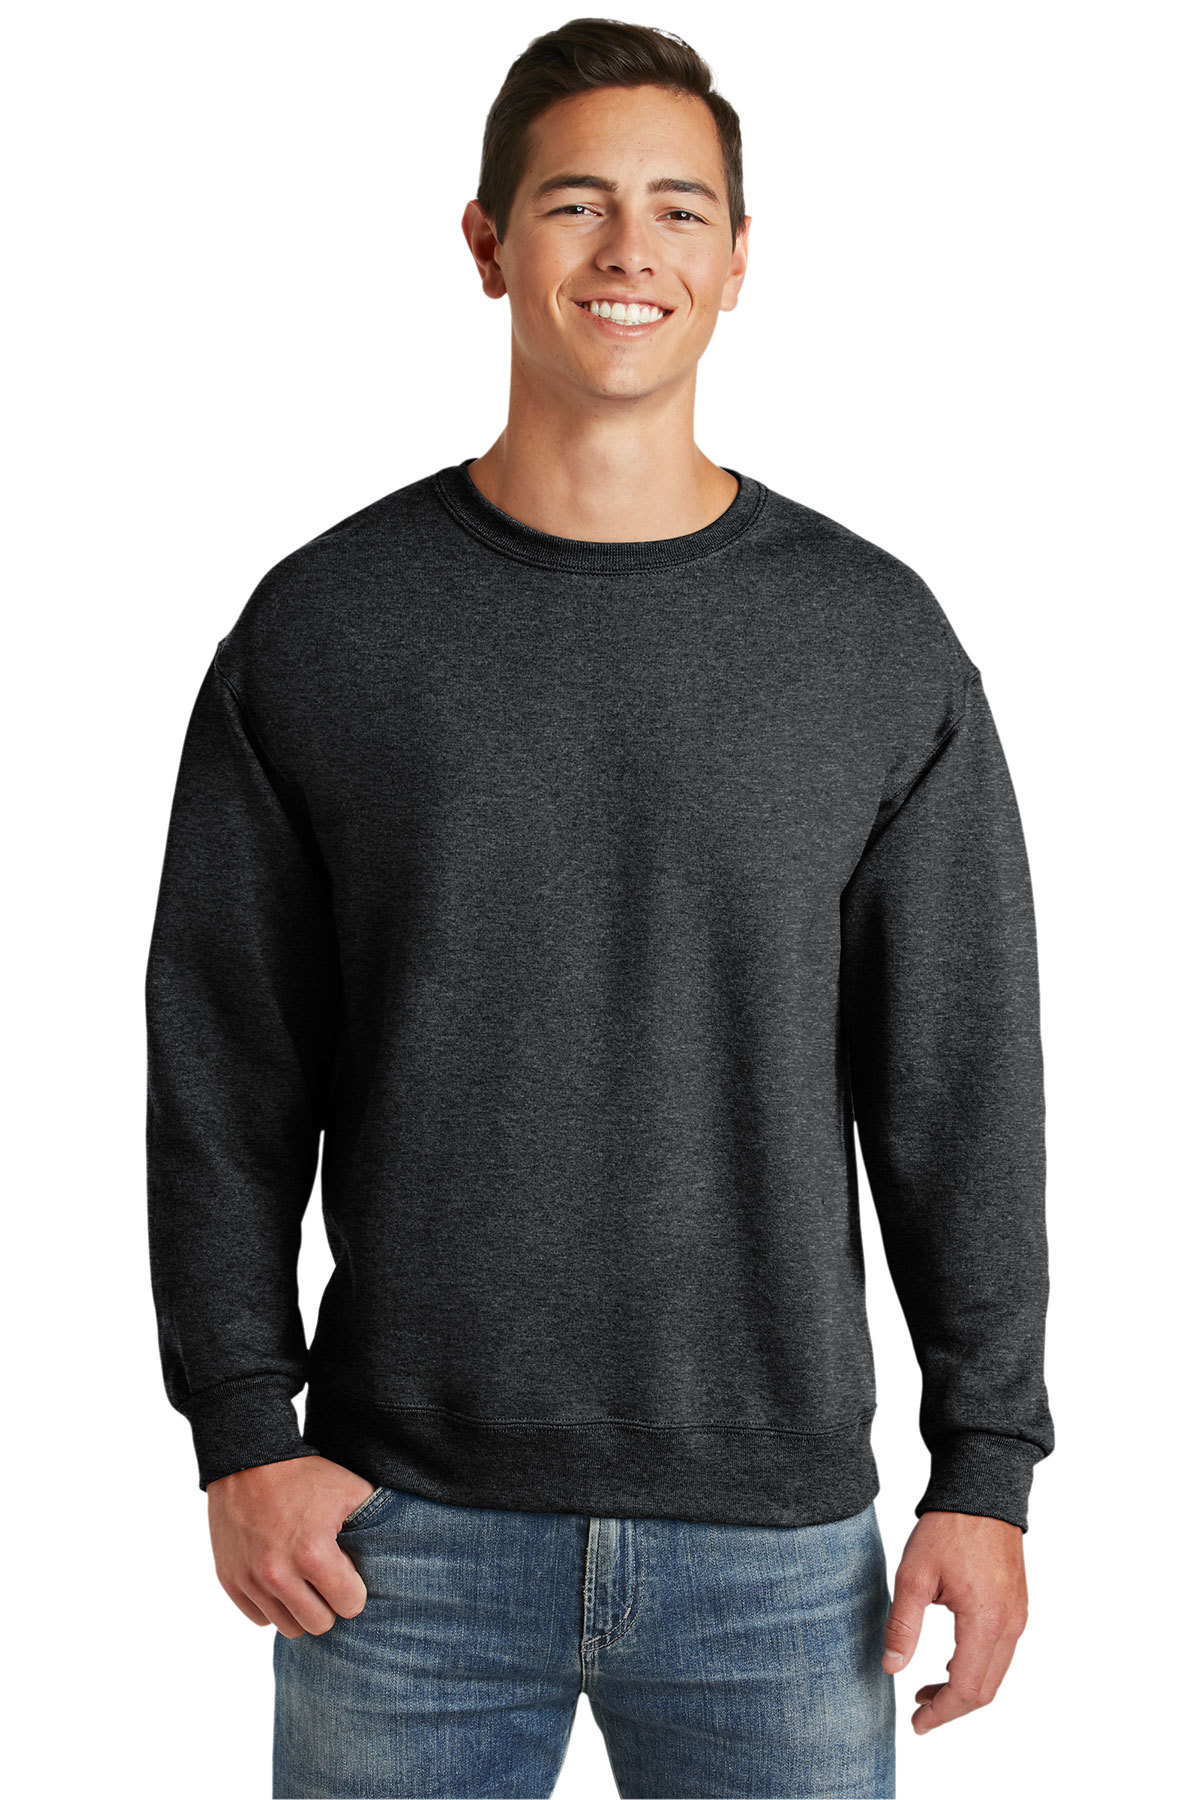 - SanMar Crewneck Product Sweats NuBlend | Sweatshirt Jerzees | Super